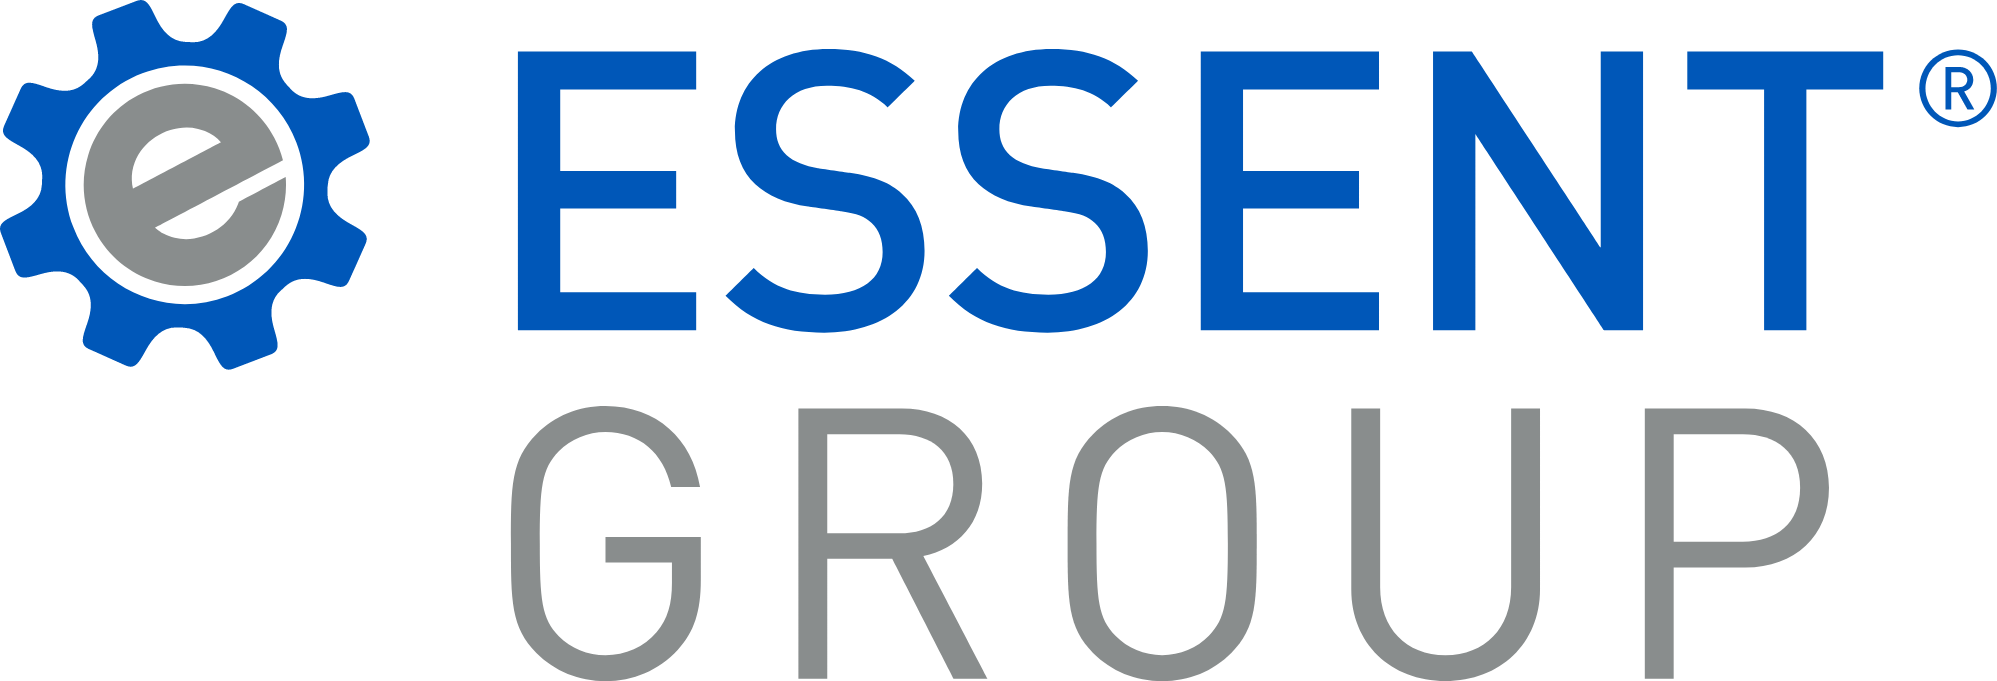 Essent Group logo large (transparent PNG)